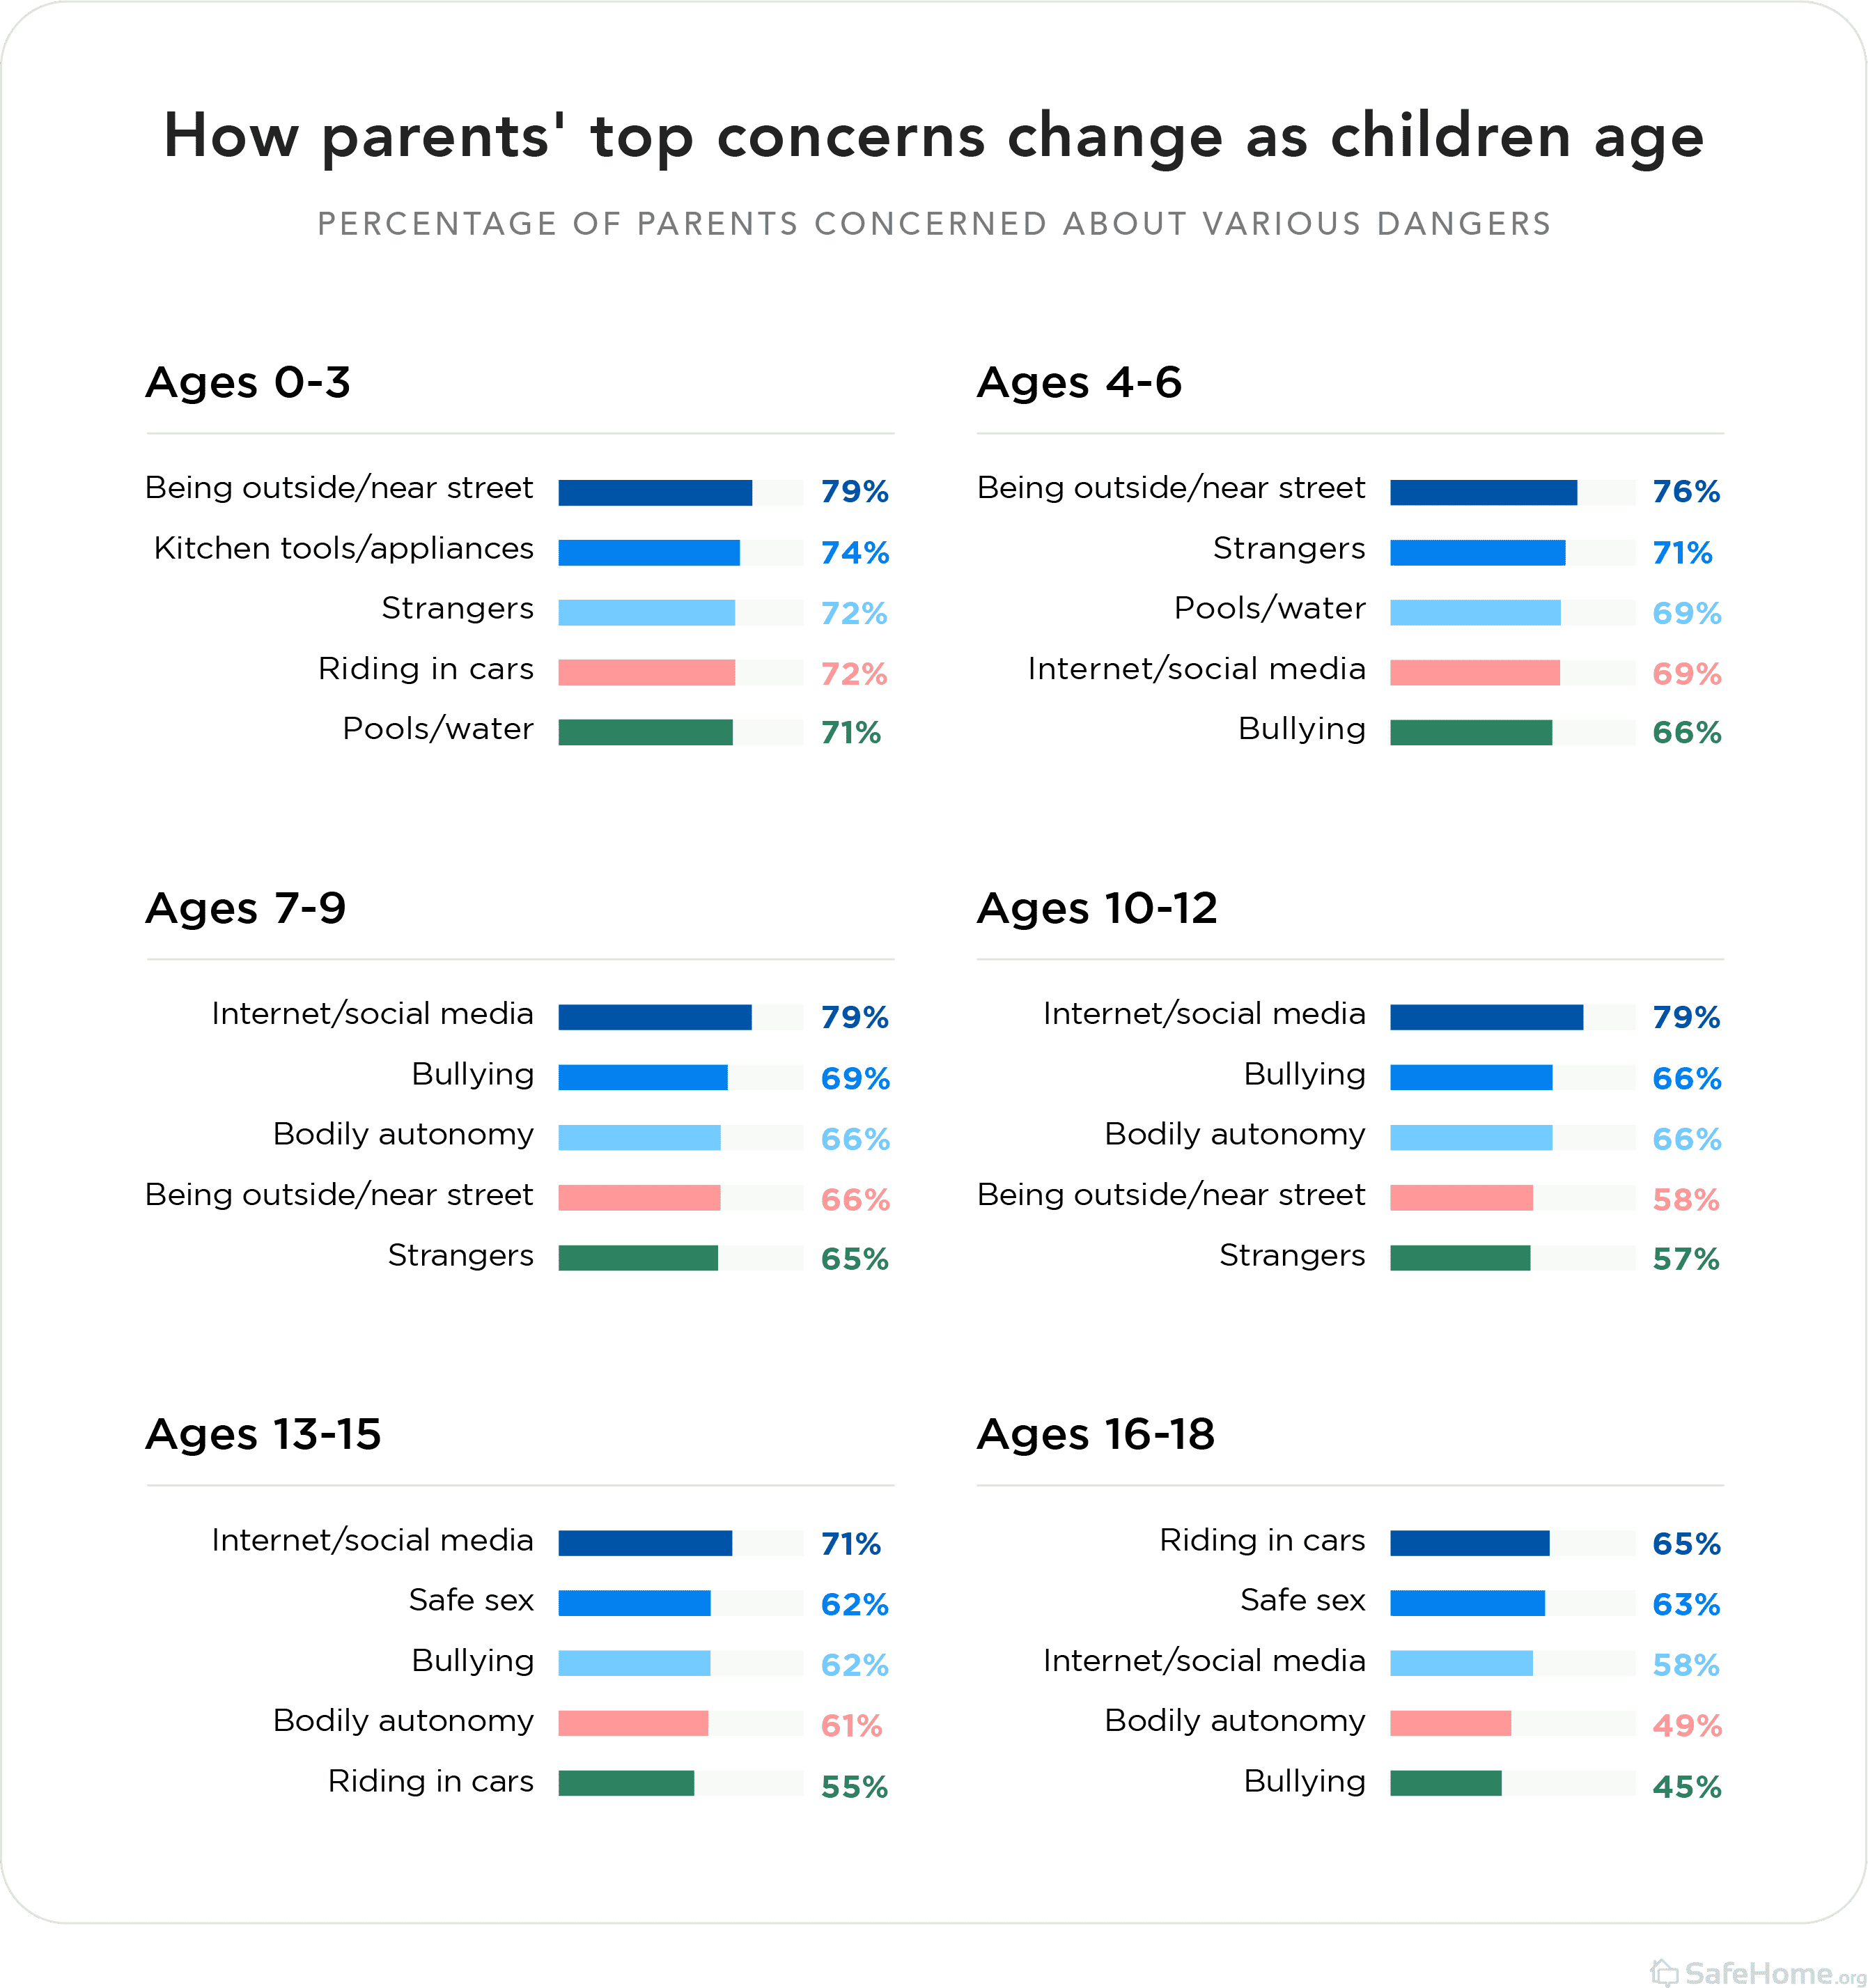 How Parents' top concerns change as children age